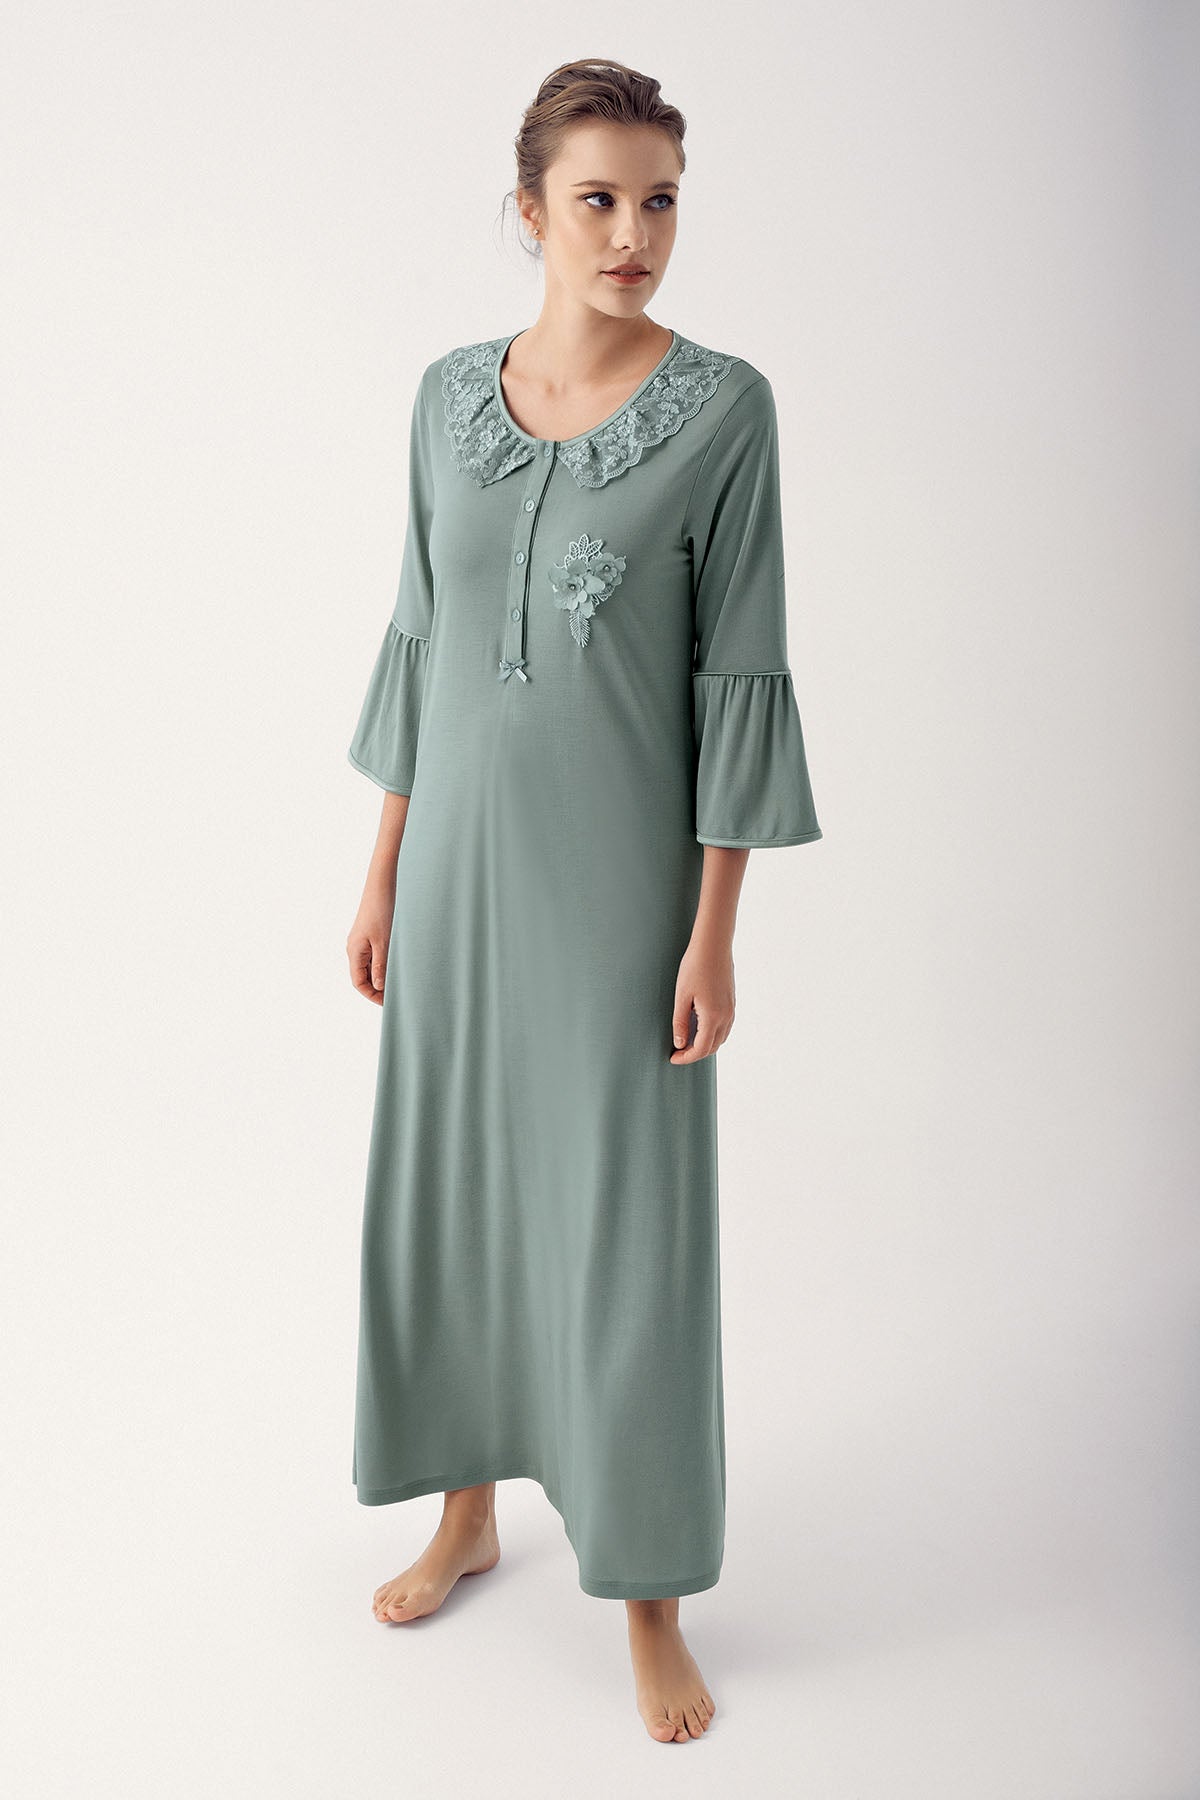 Lace Collar Flywheel Arm Maternity & Nursing Nightgown Green - 14108